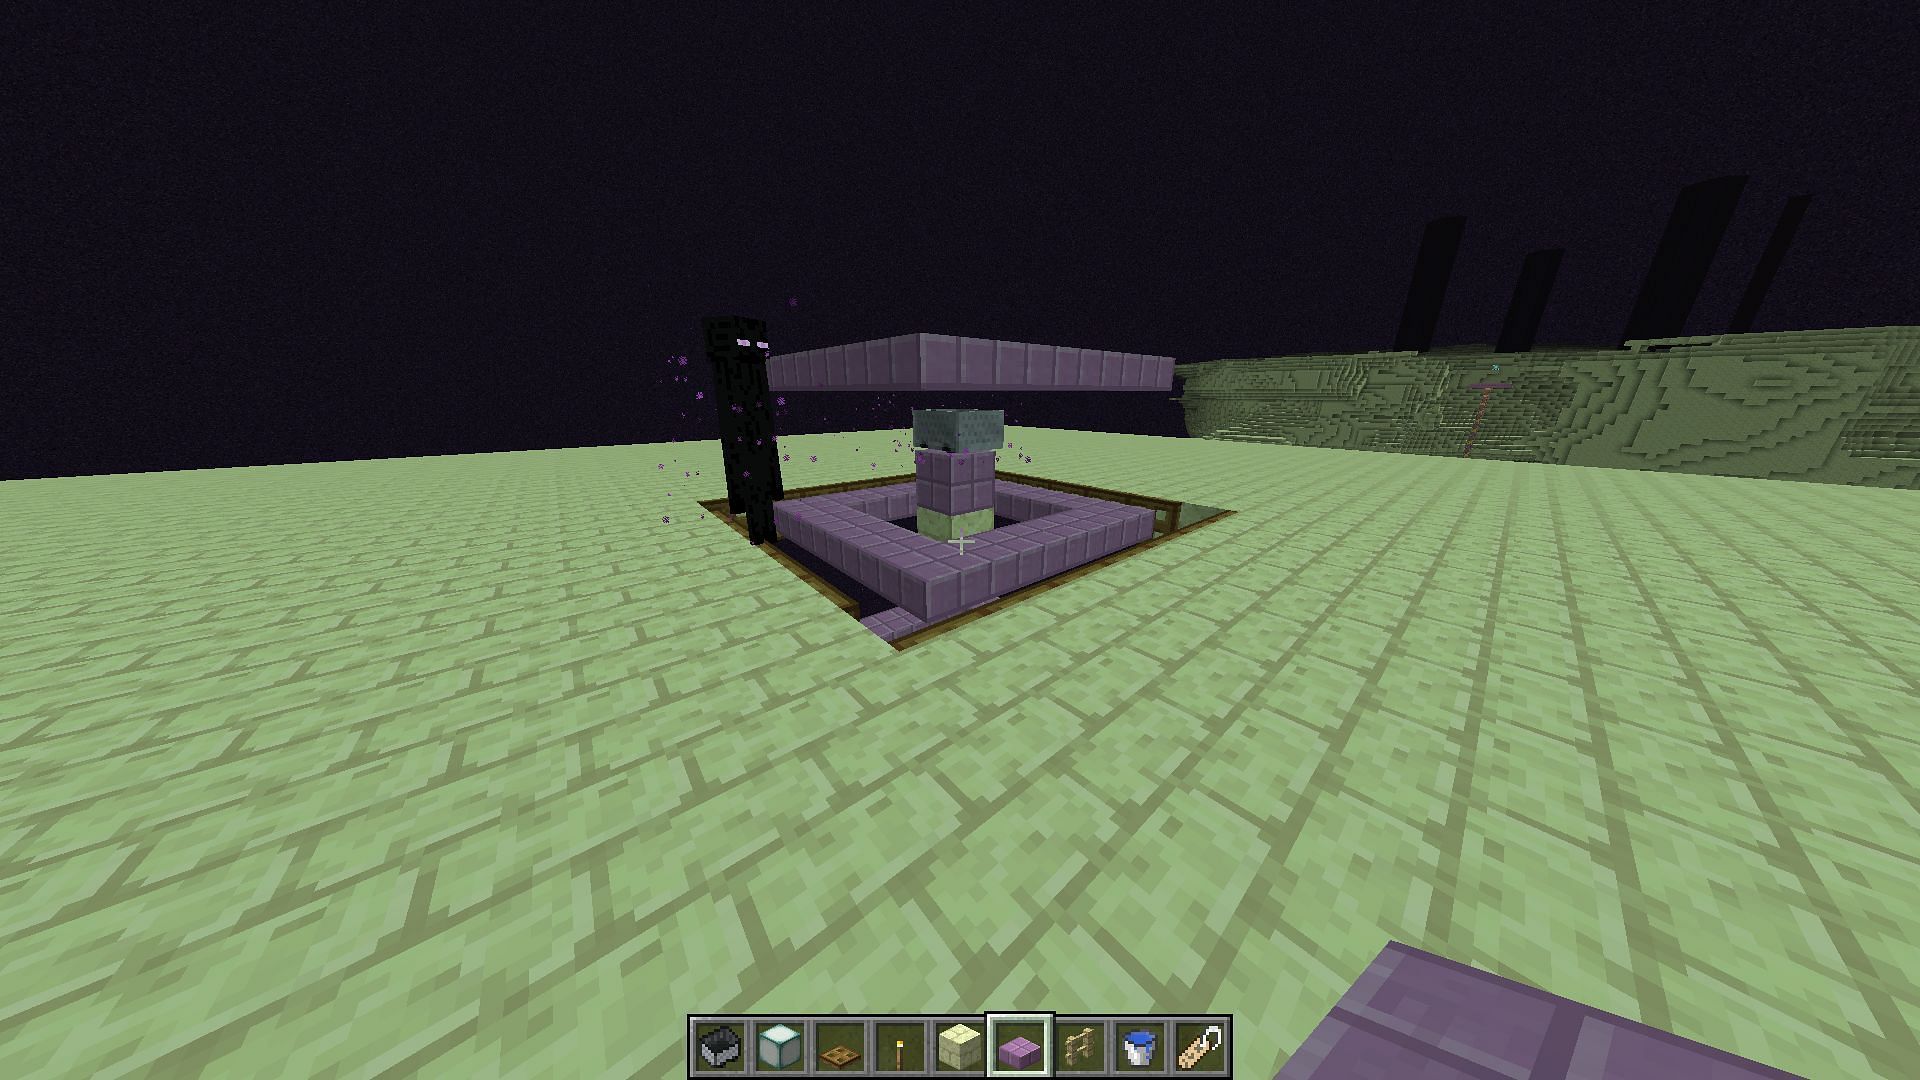 Enderman farm using an Endermite in a minecart (Image via MinecraftForum)